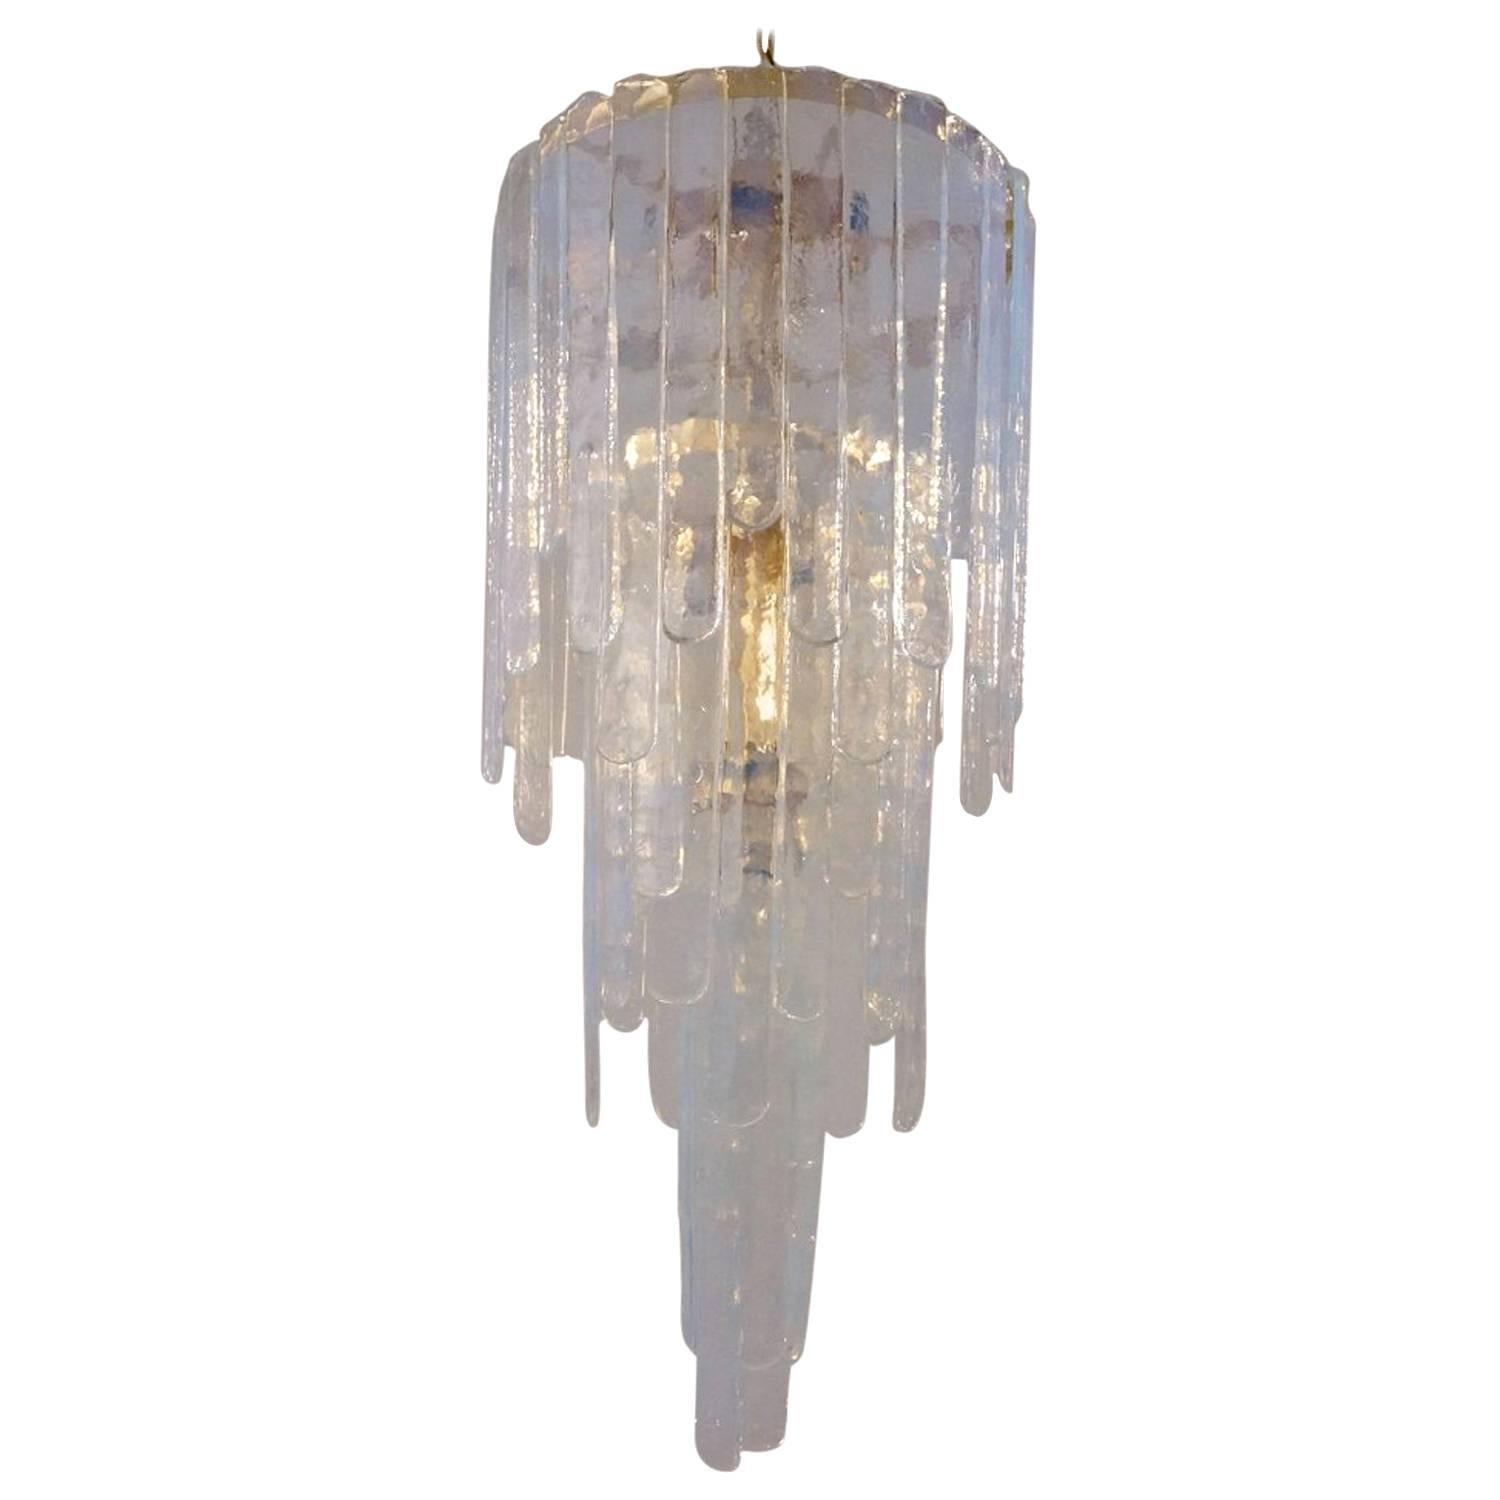 Mazzega Carlo Nason style chandelier Murano vaseline glass gilt frame For Sale